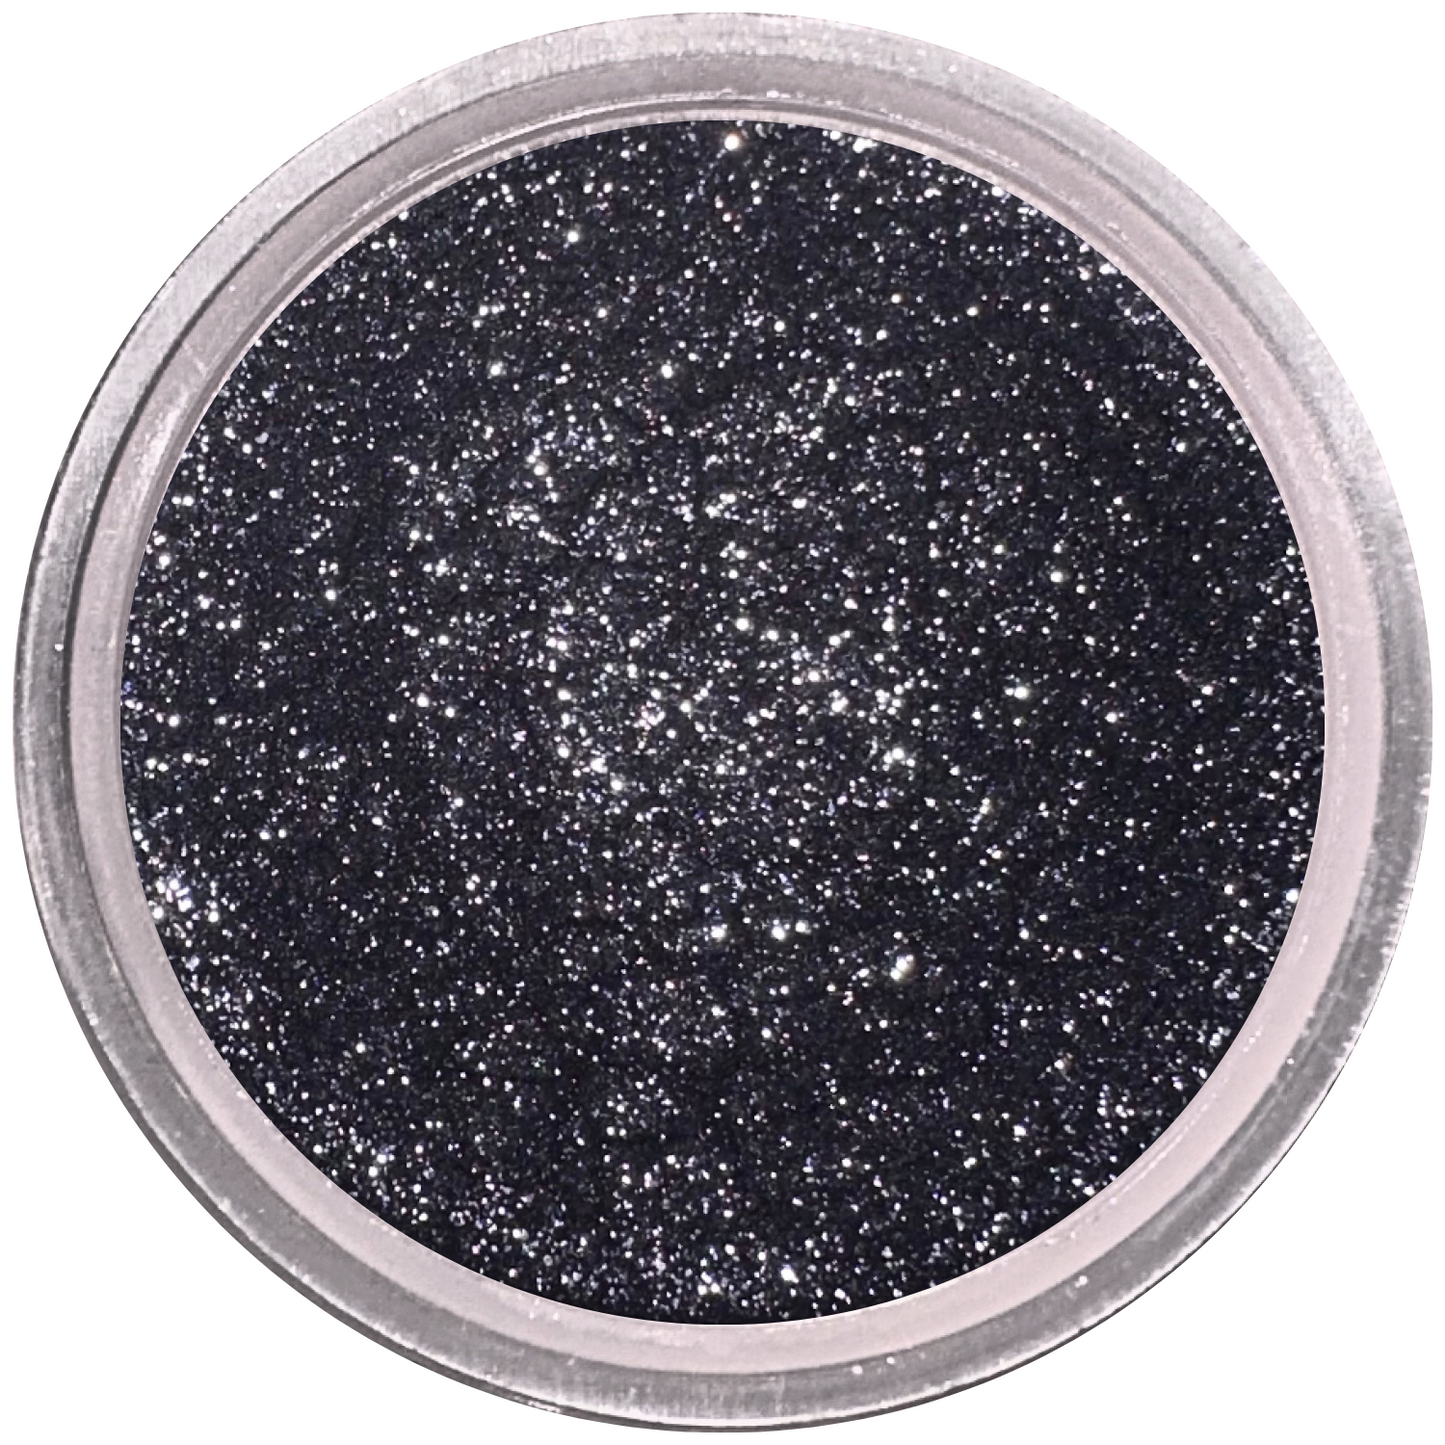 Diamond Dust Loose Powder Mineral Eyeshadow Single 3g